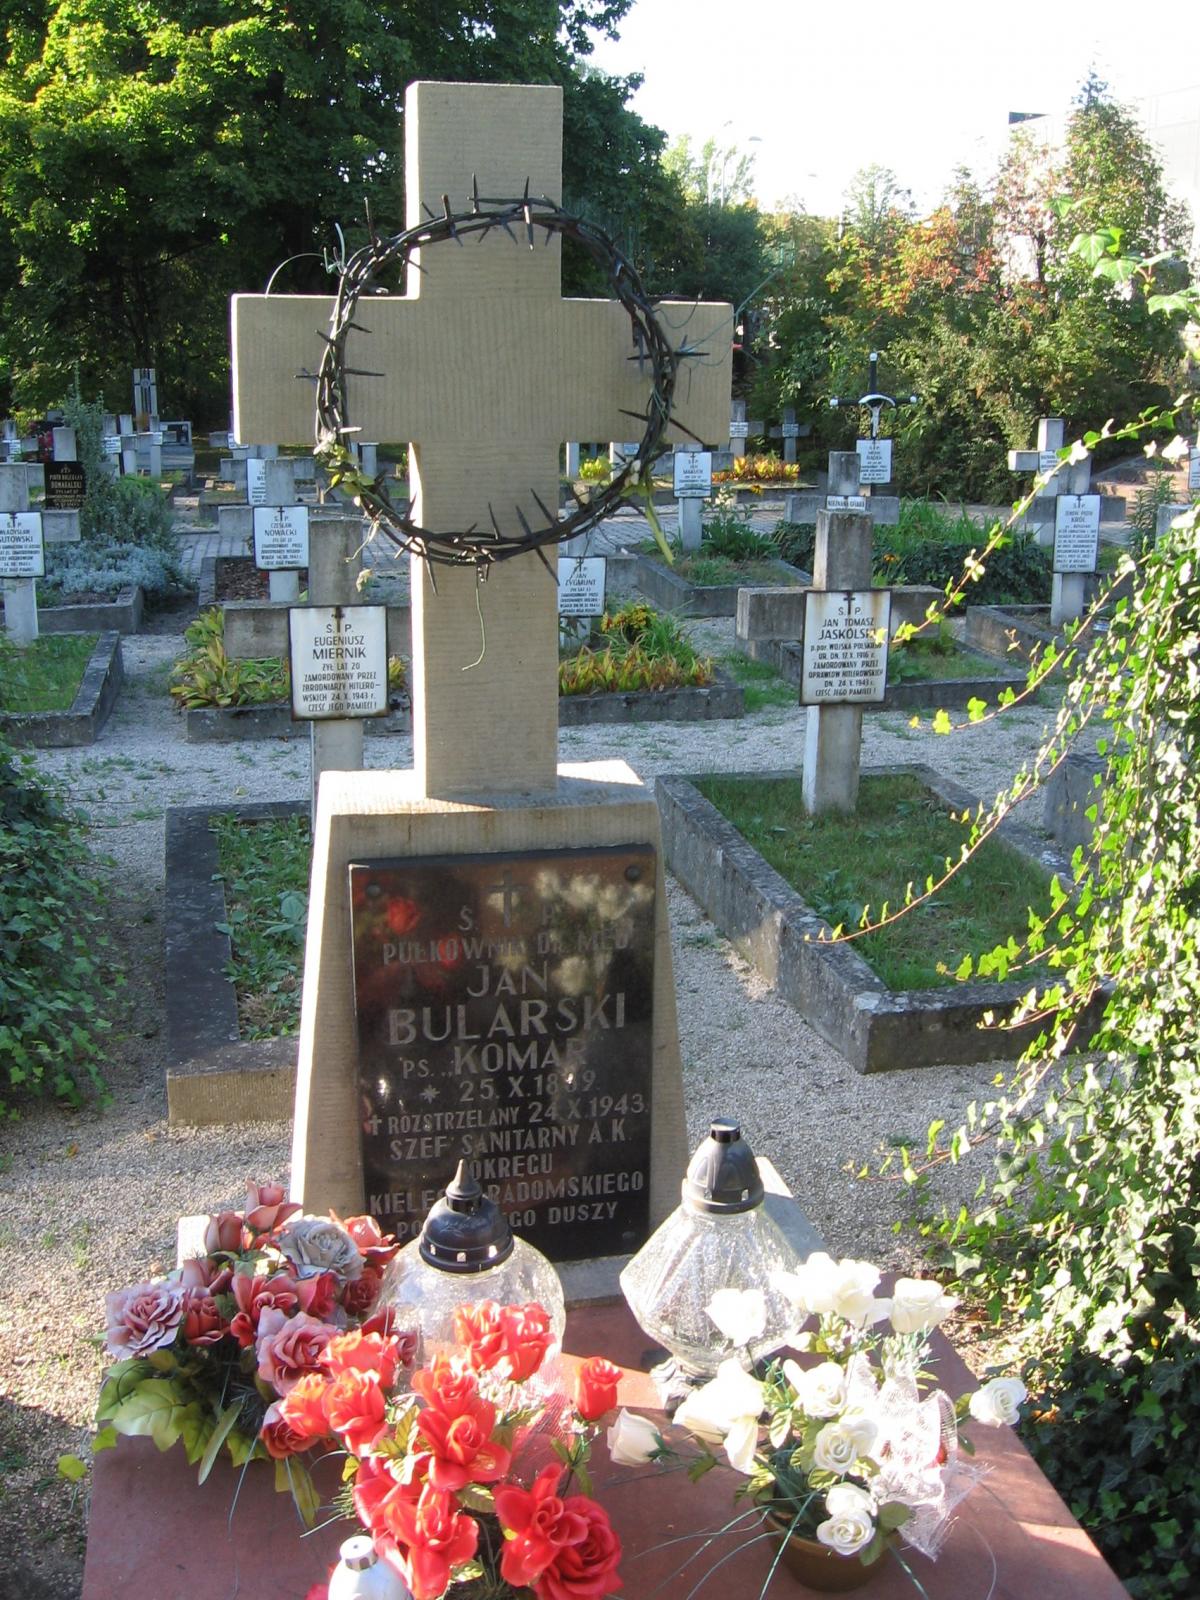 Wikipedia, Jan Bularski, Partisan Cemetery in Kielce, Self-published work